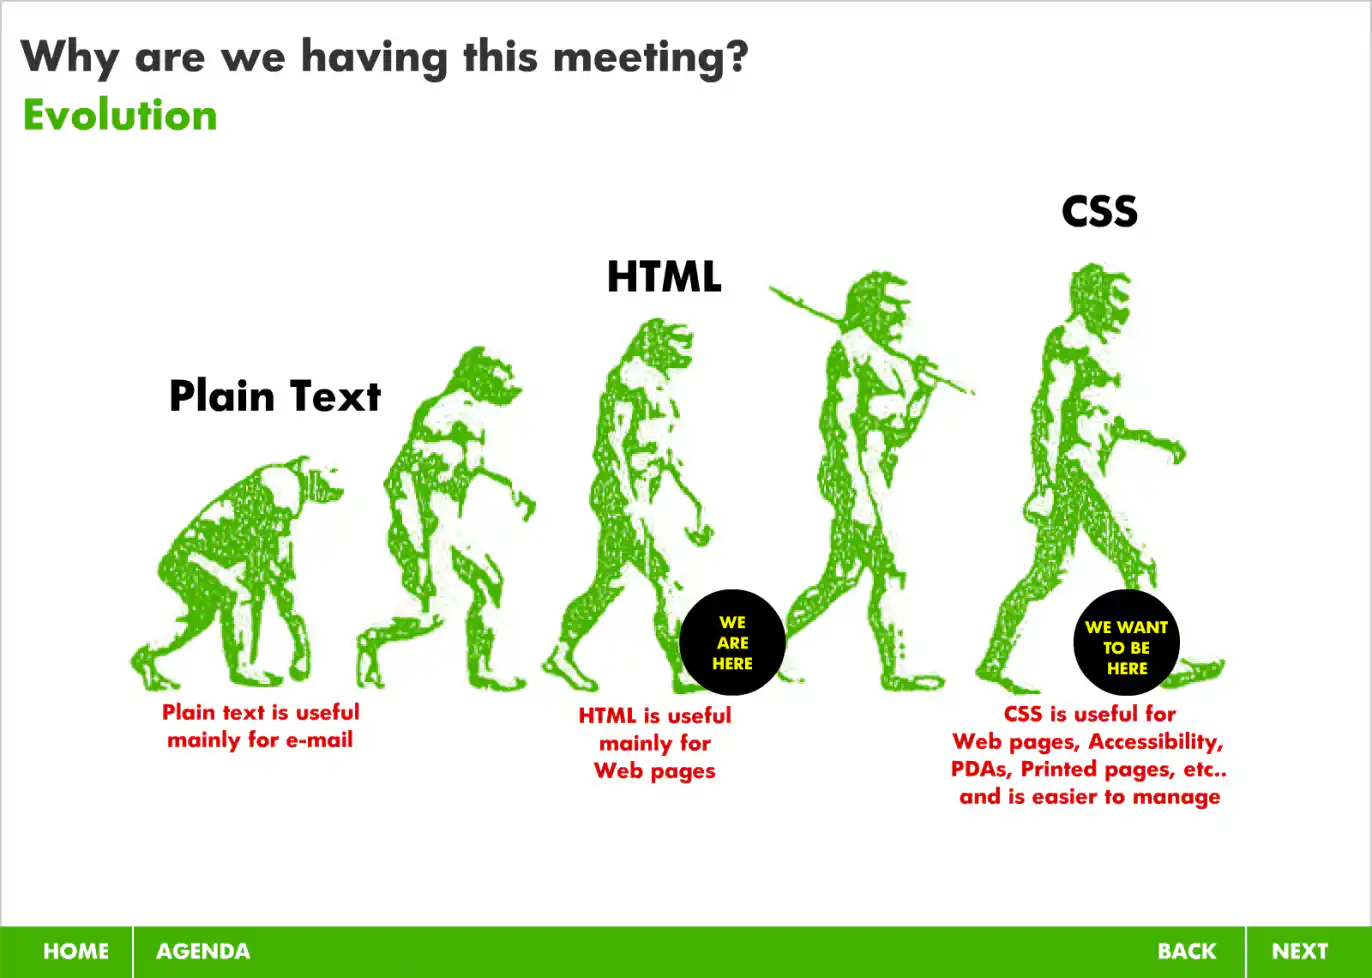 Slide 04: Evolution of Content Presentation Showing Plain Text then HTML then CSS